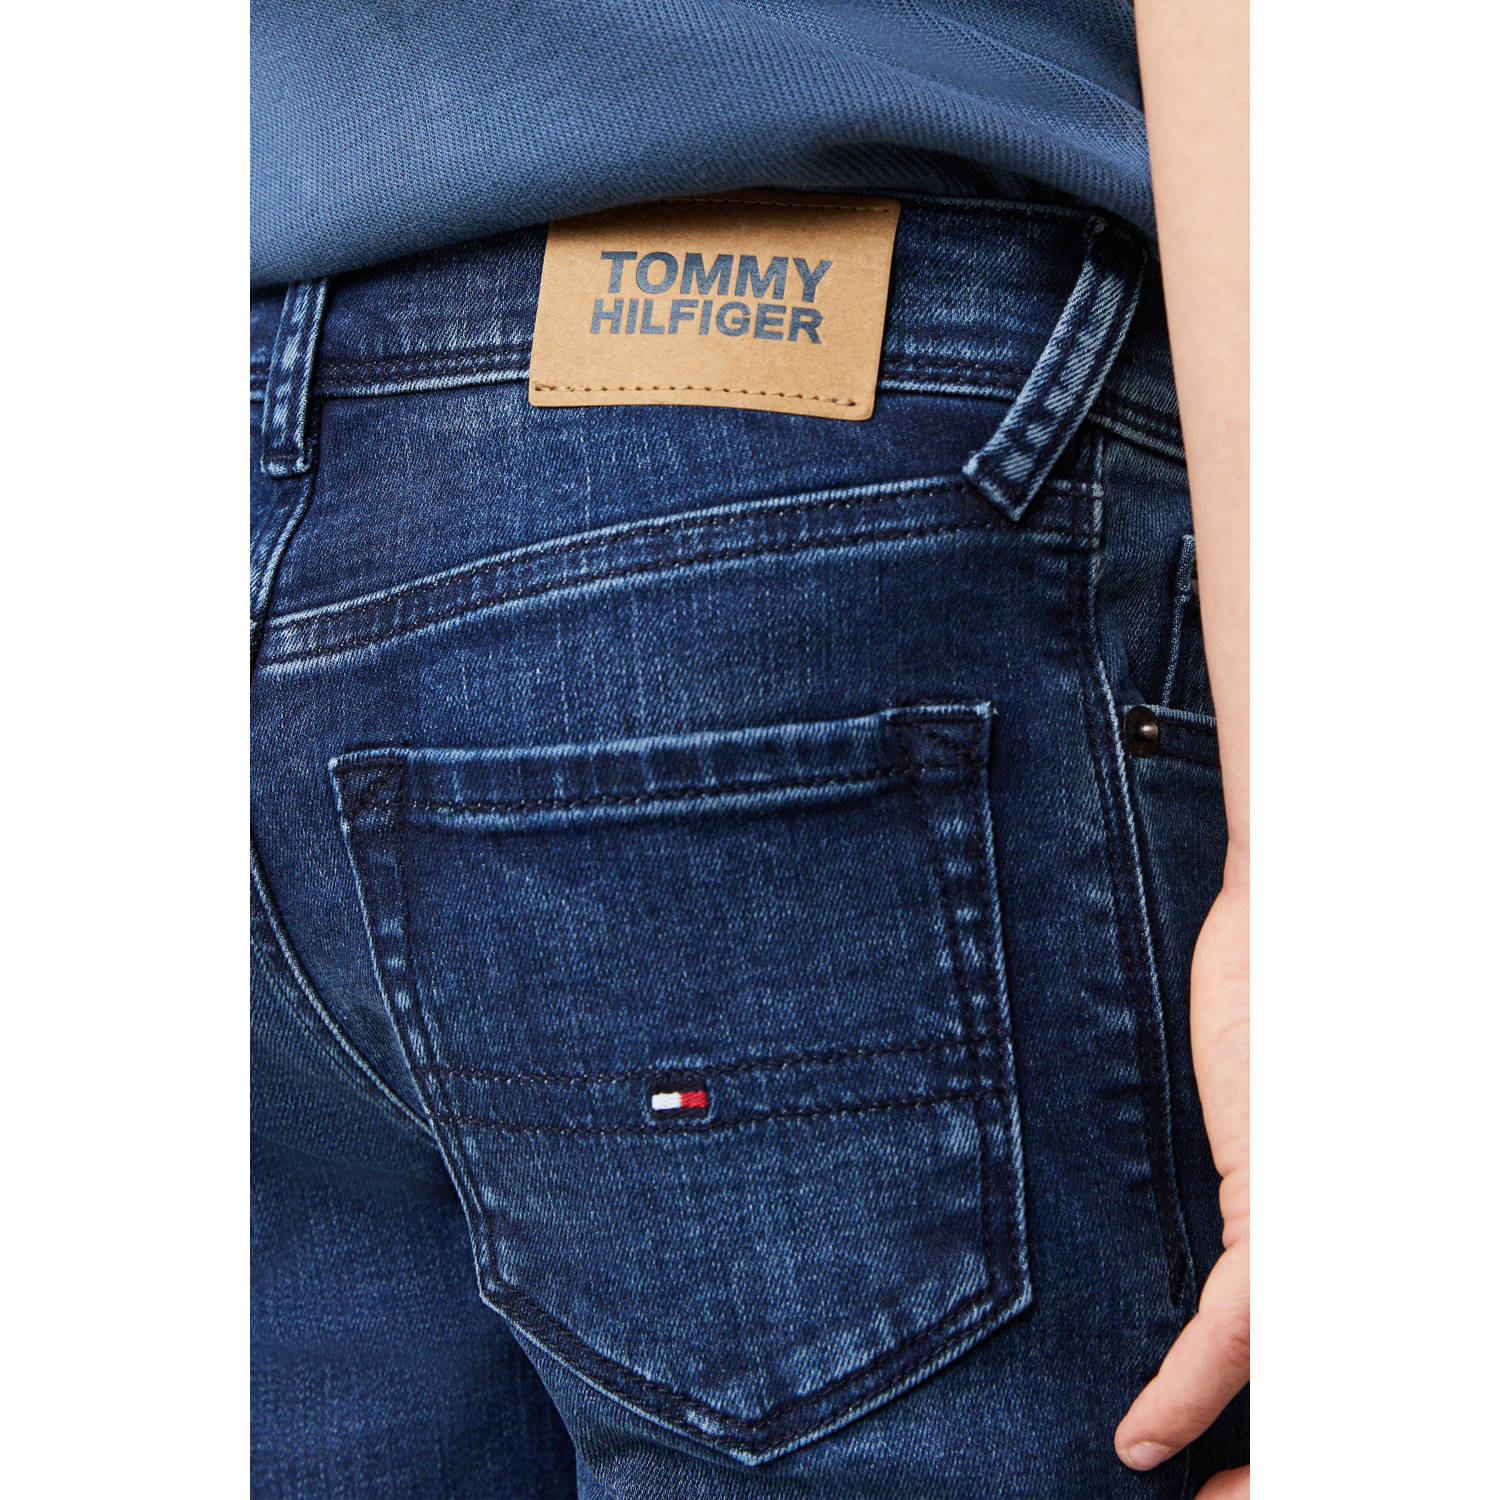 Tommy Hilfiger slim fit jeans coralblue